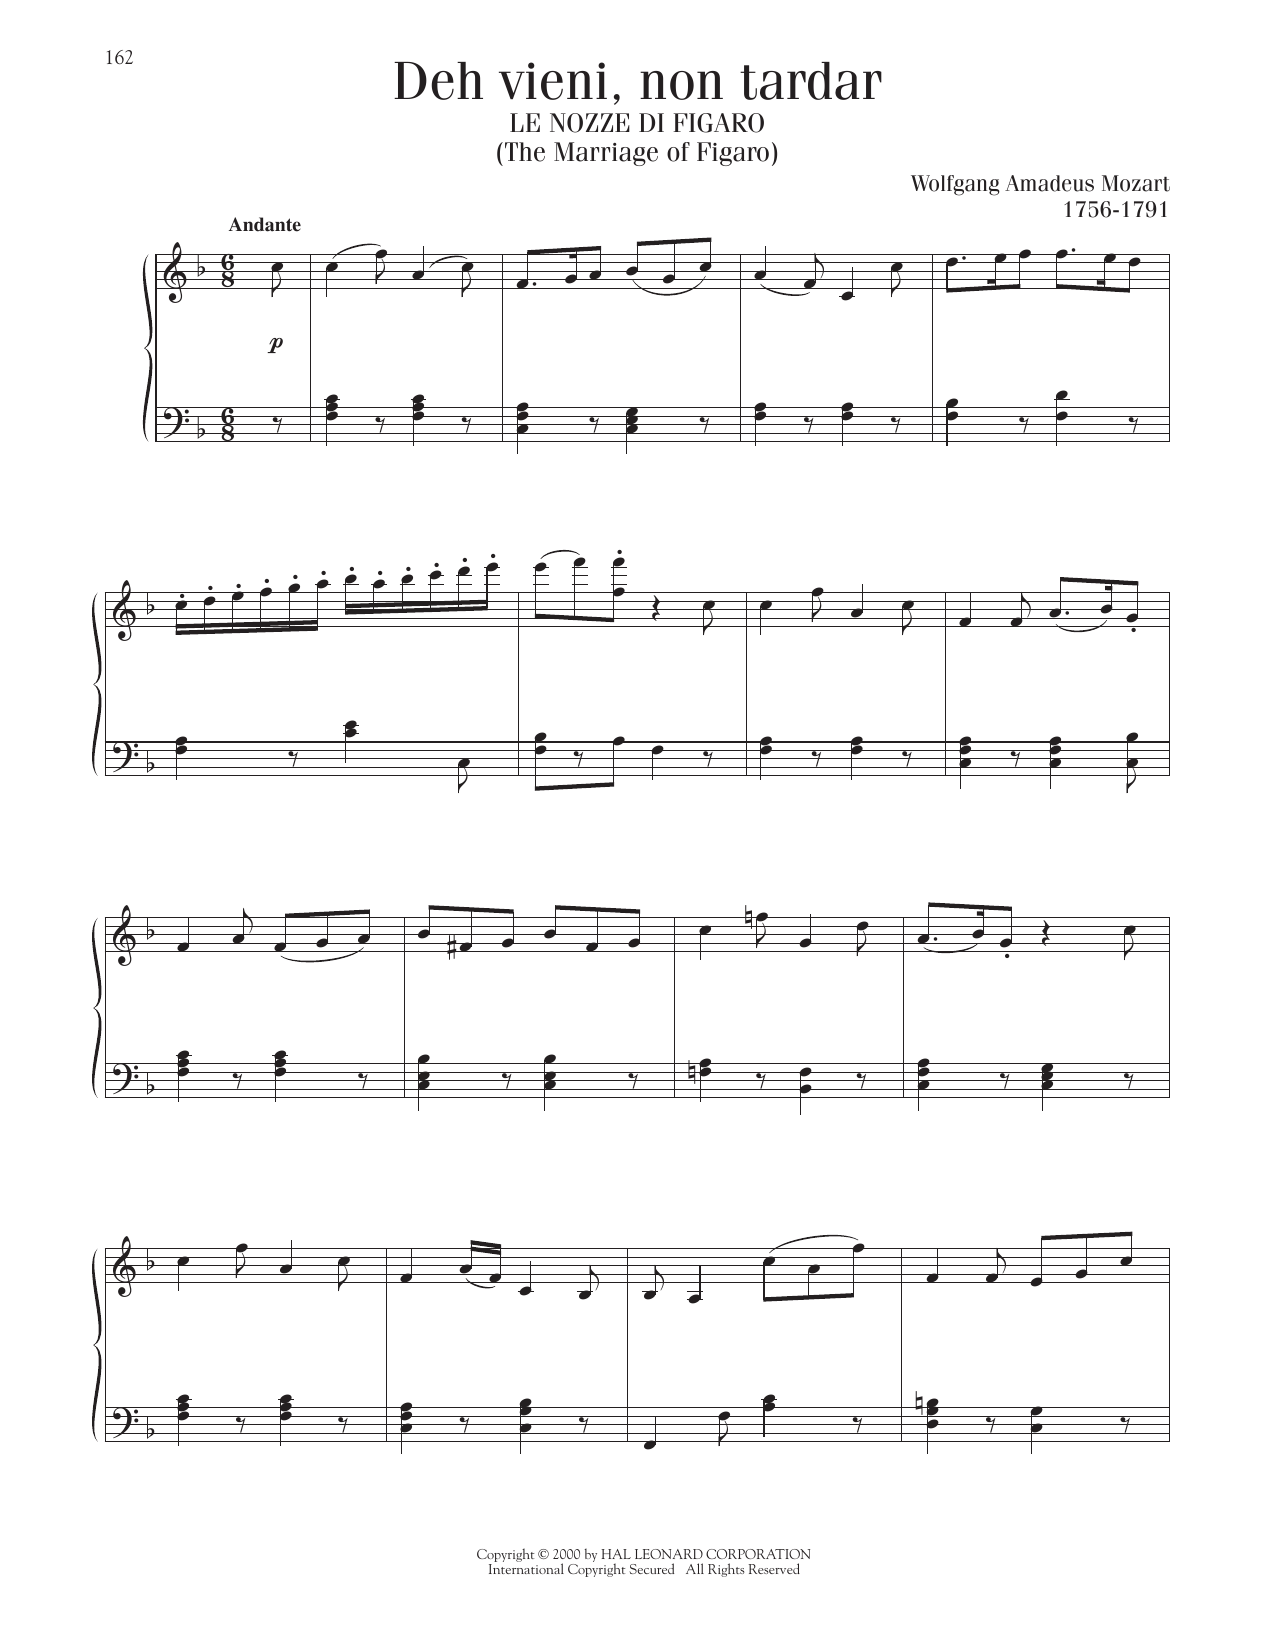 Wolfgang Amadeus Mozart Deh Vieni, Non Tardar (The Marriage Of Figaro) sheet music notes printable PDF score